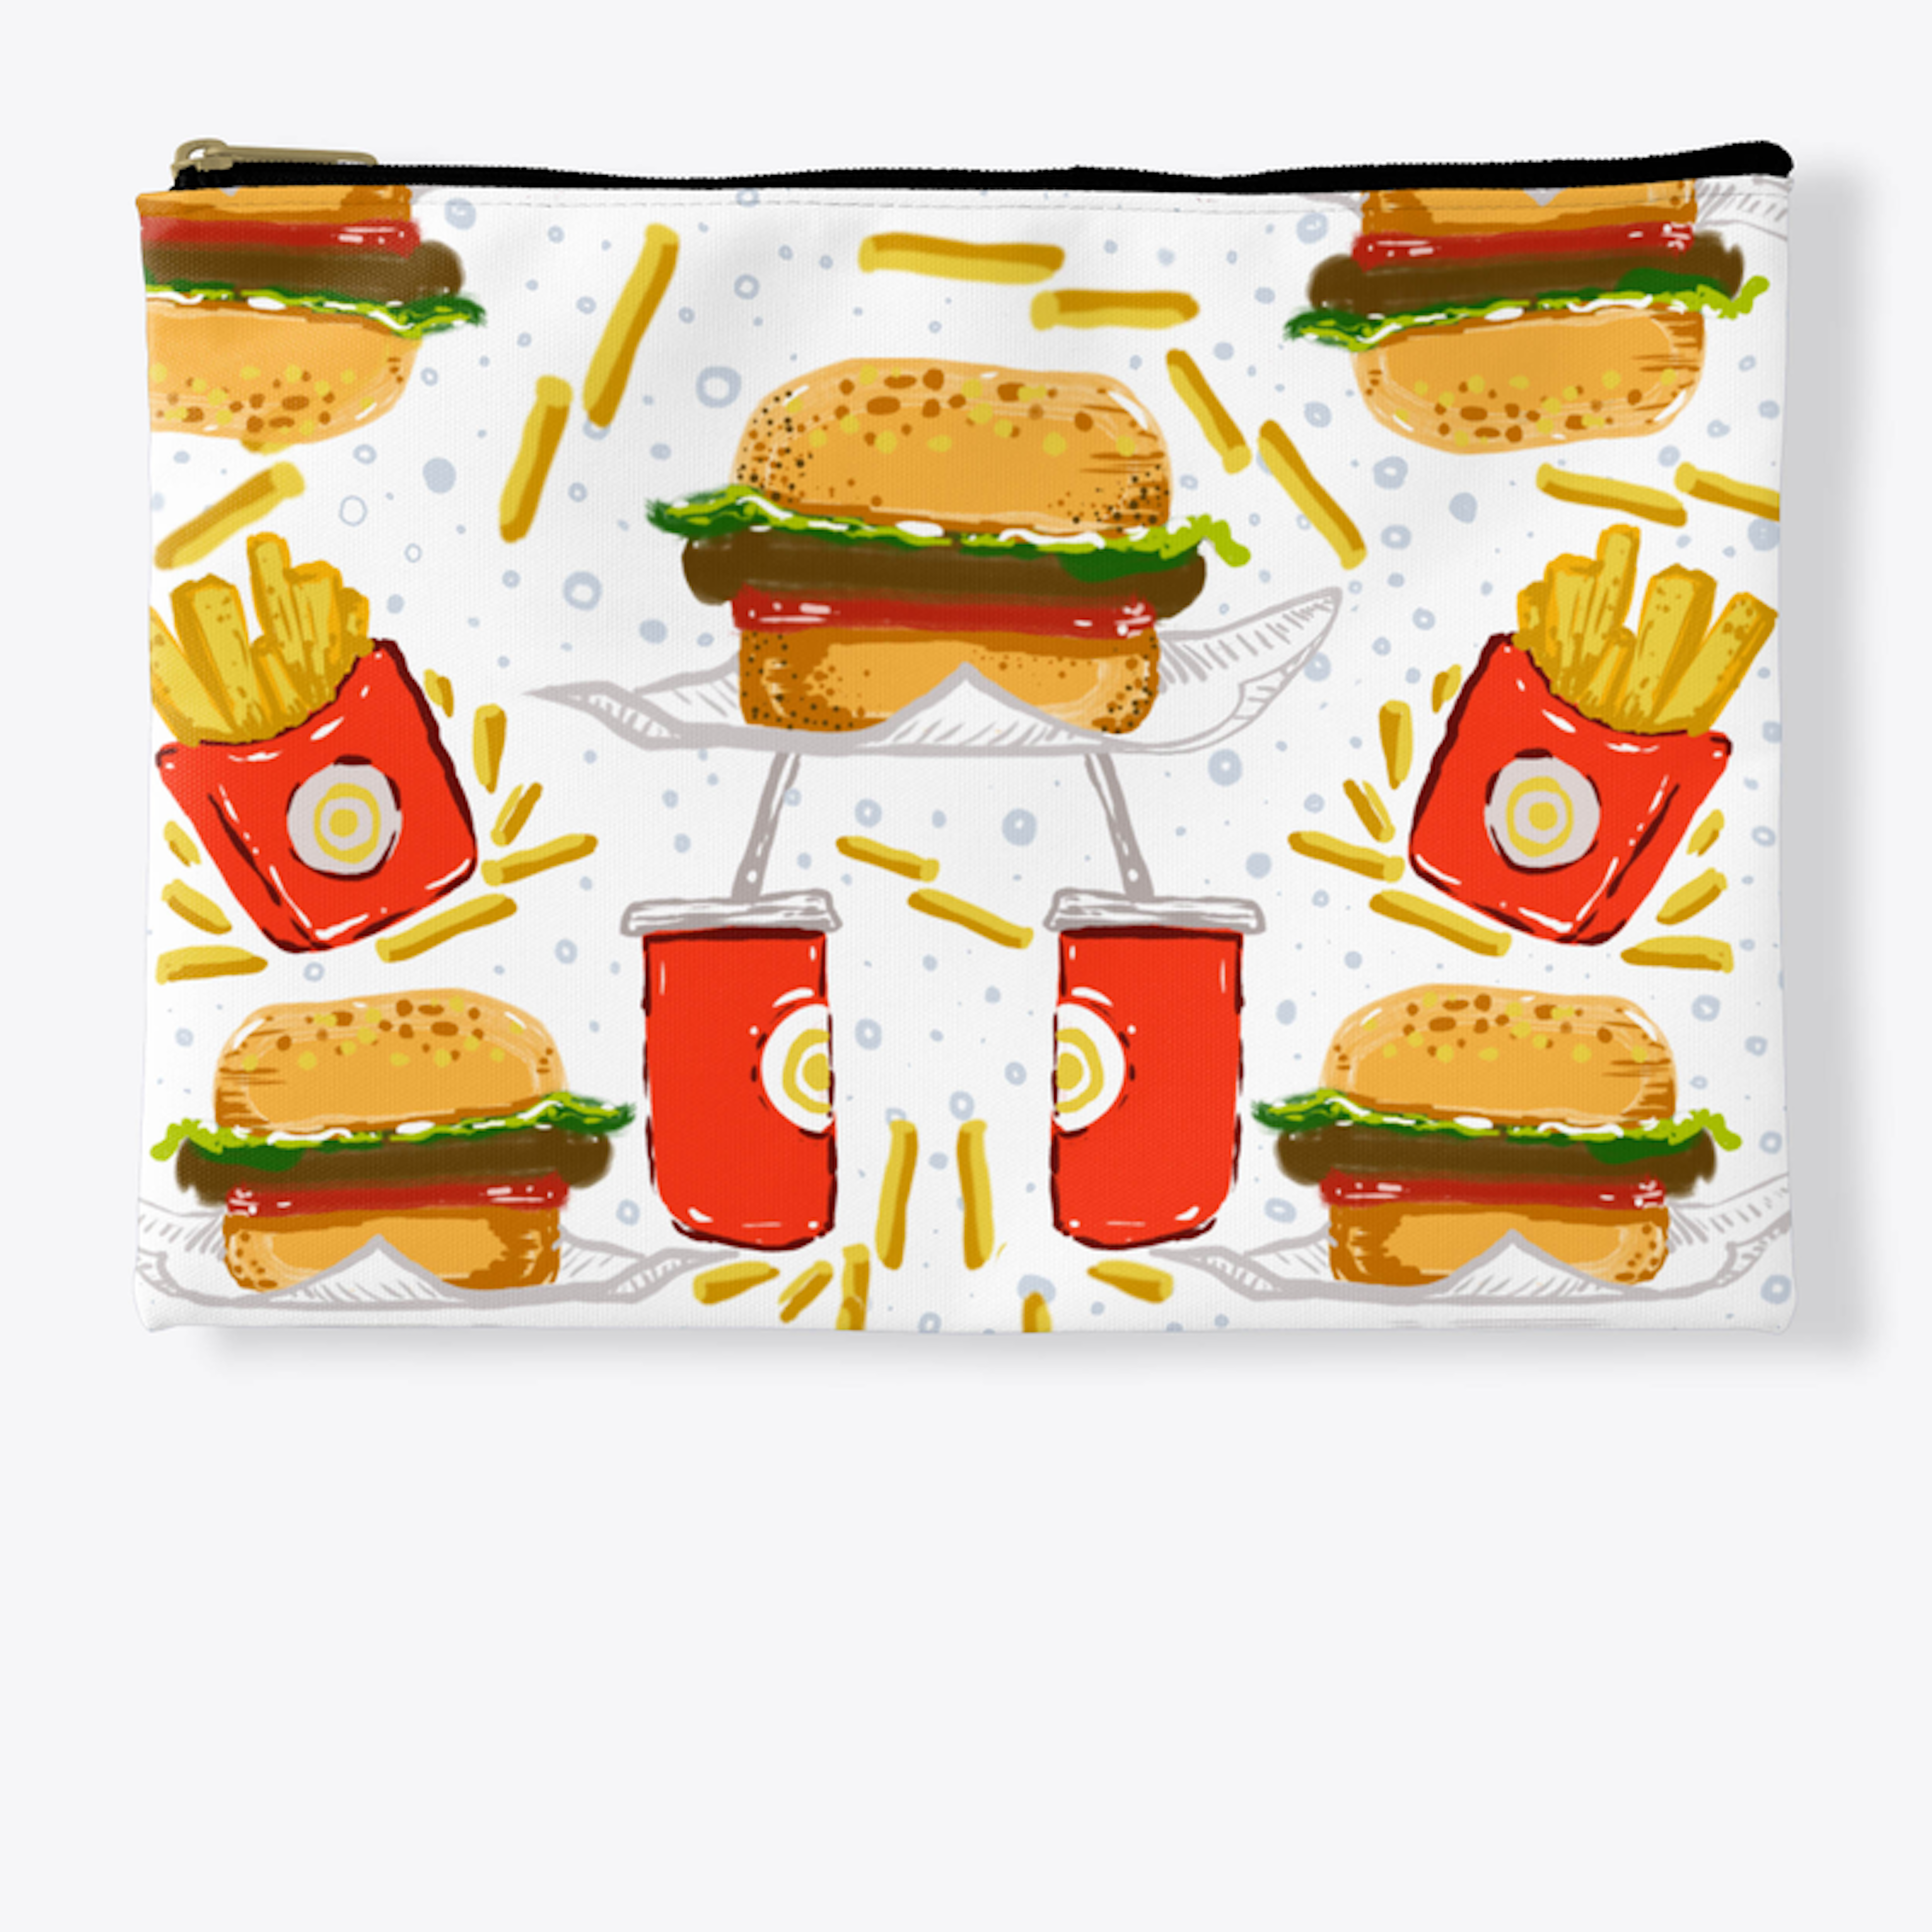 Retro Hamburger Meal - Yum!